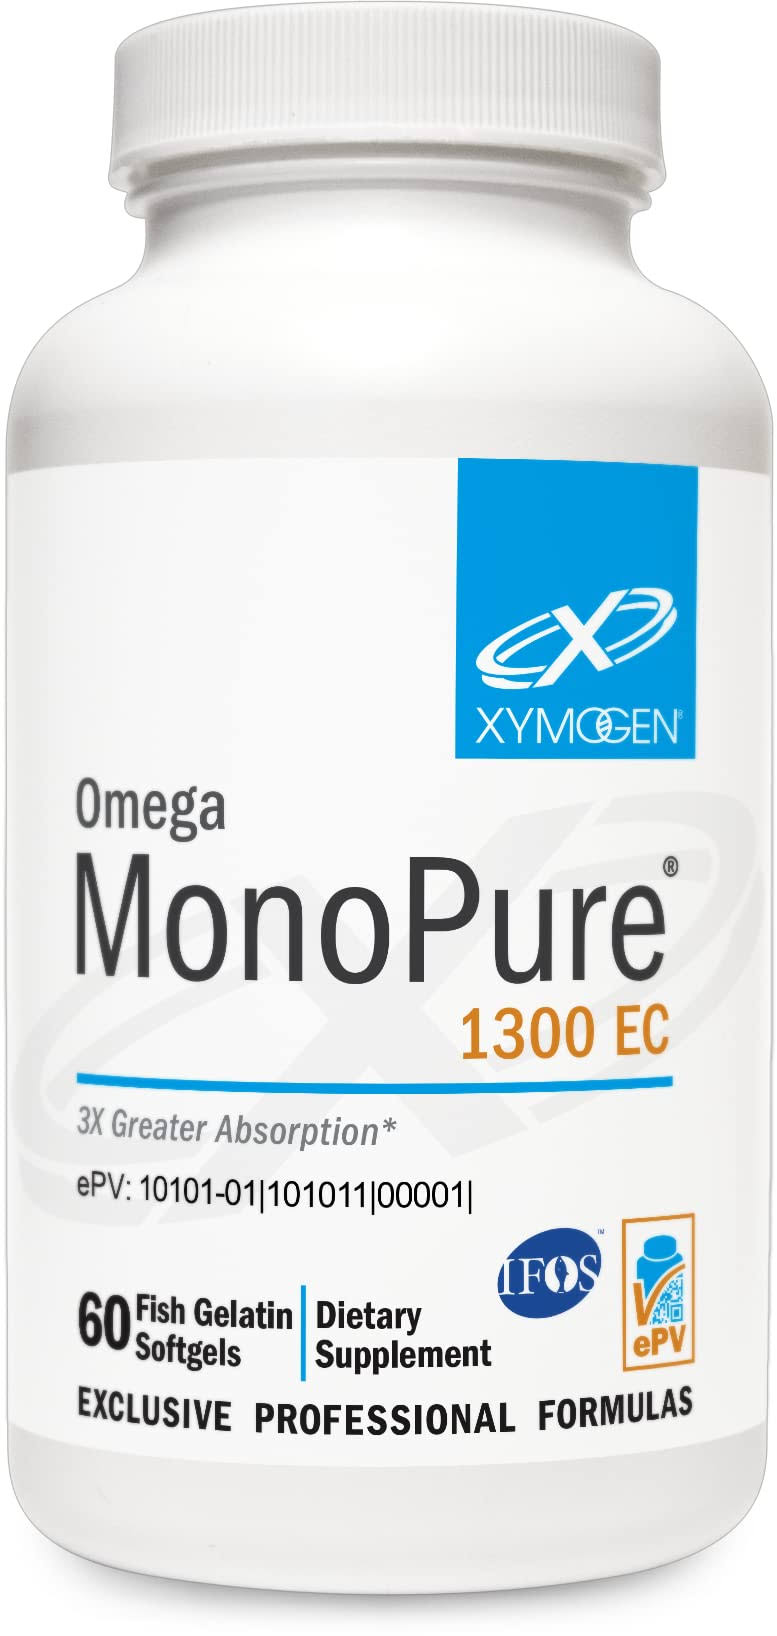 Xymogen Omega MonoPure 1300 EC 60 Softgels